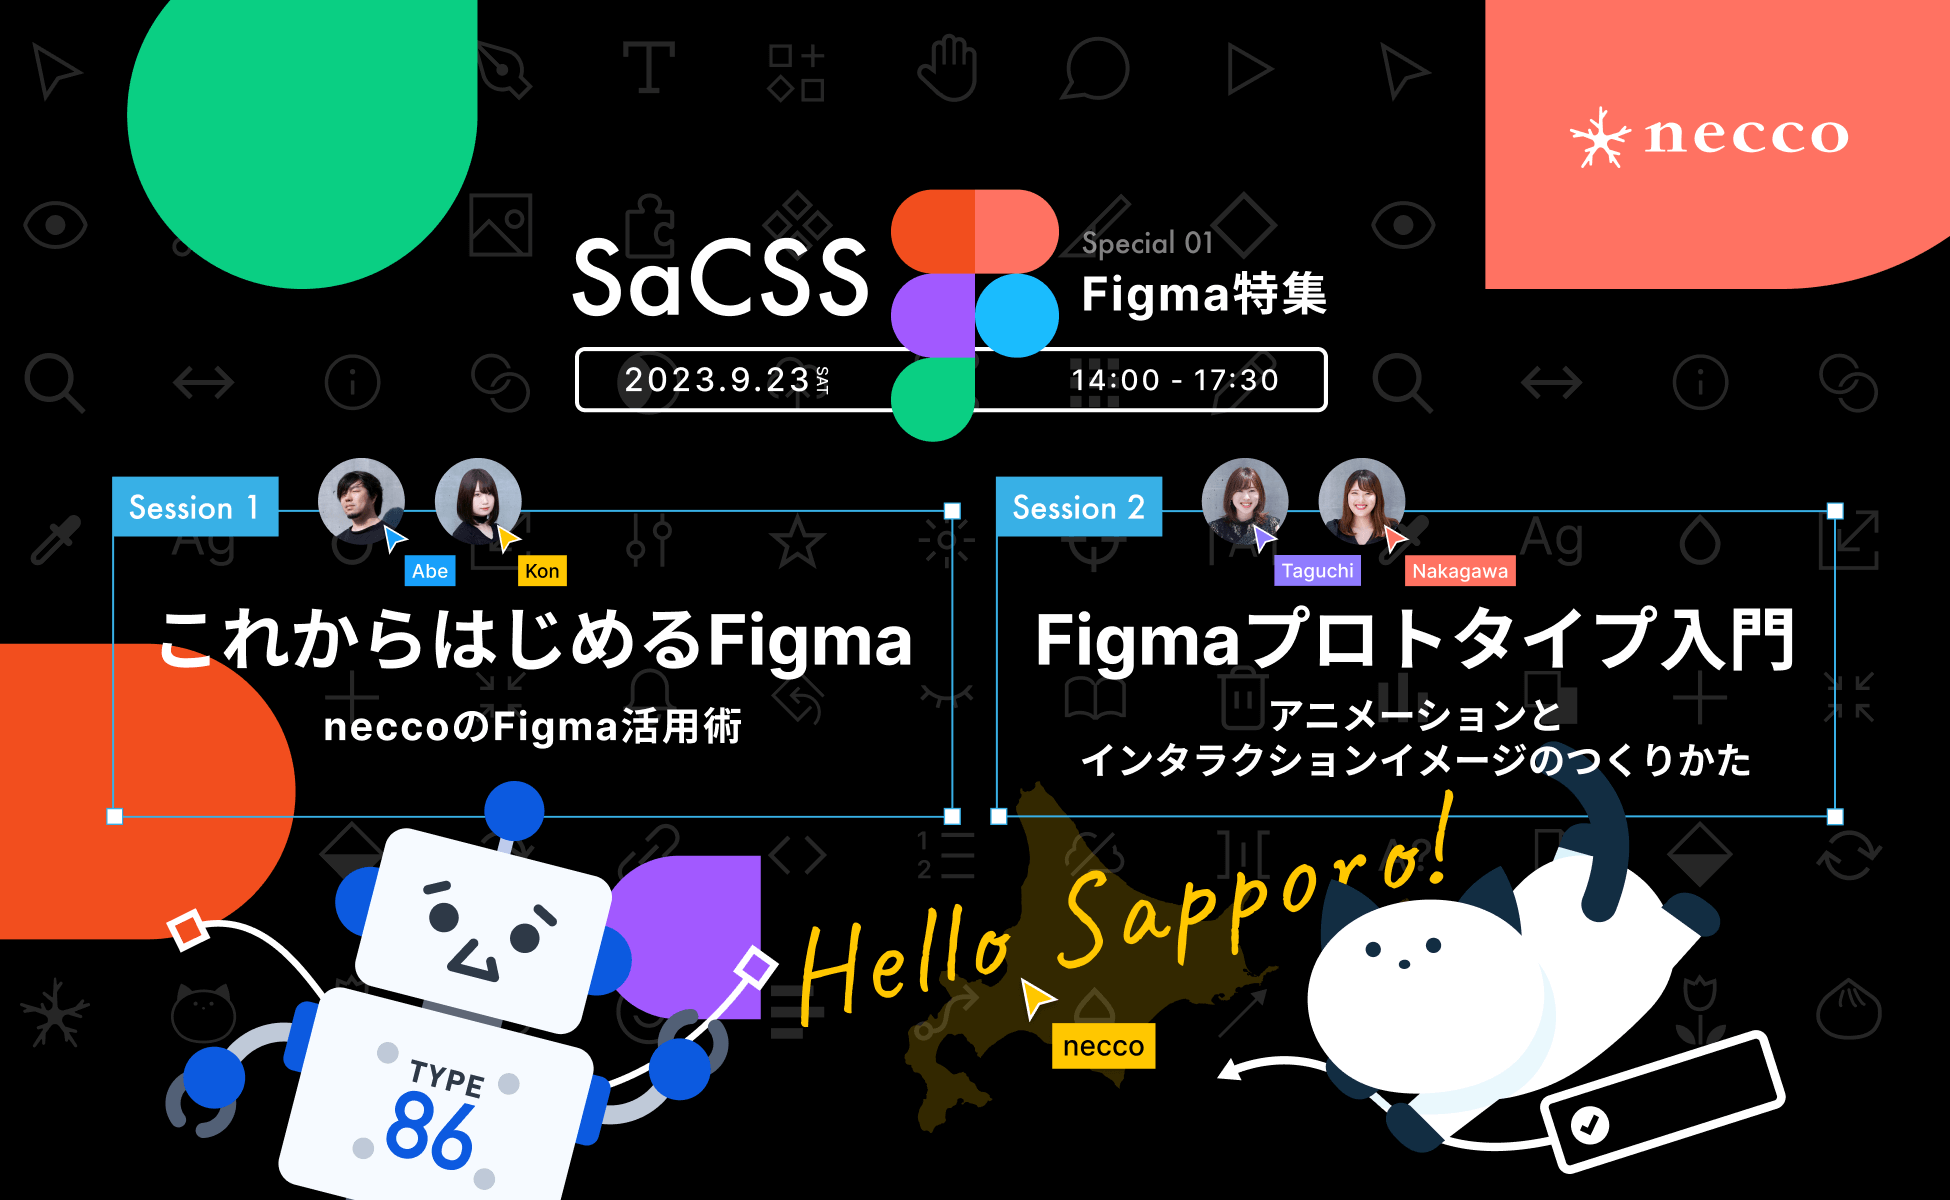 SaCSS Season2 Special01 Figma Special01 necco用アイキャッチ画像